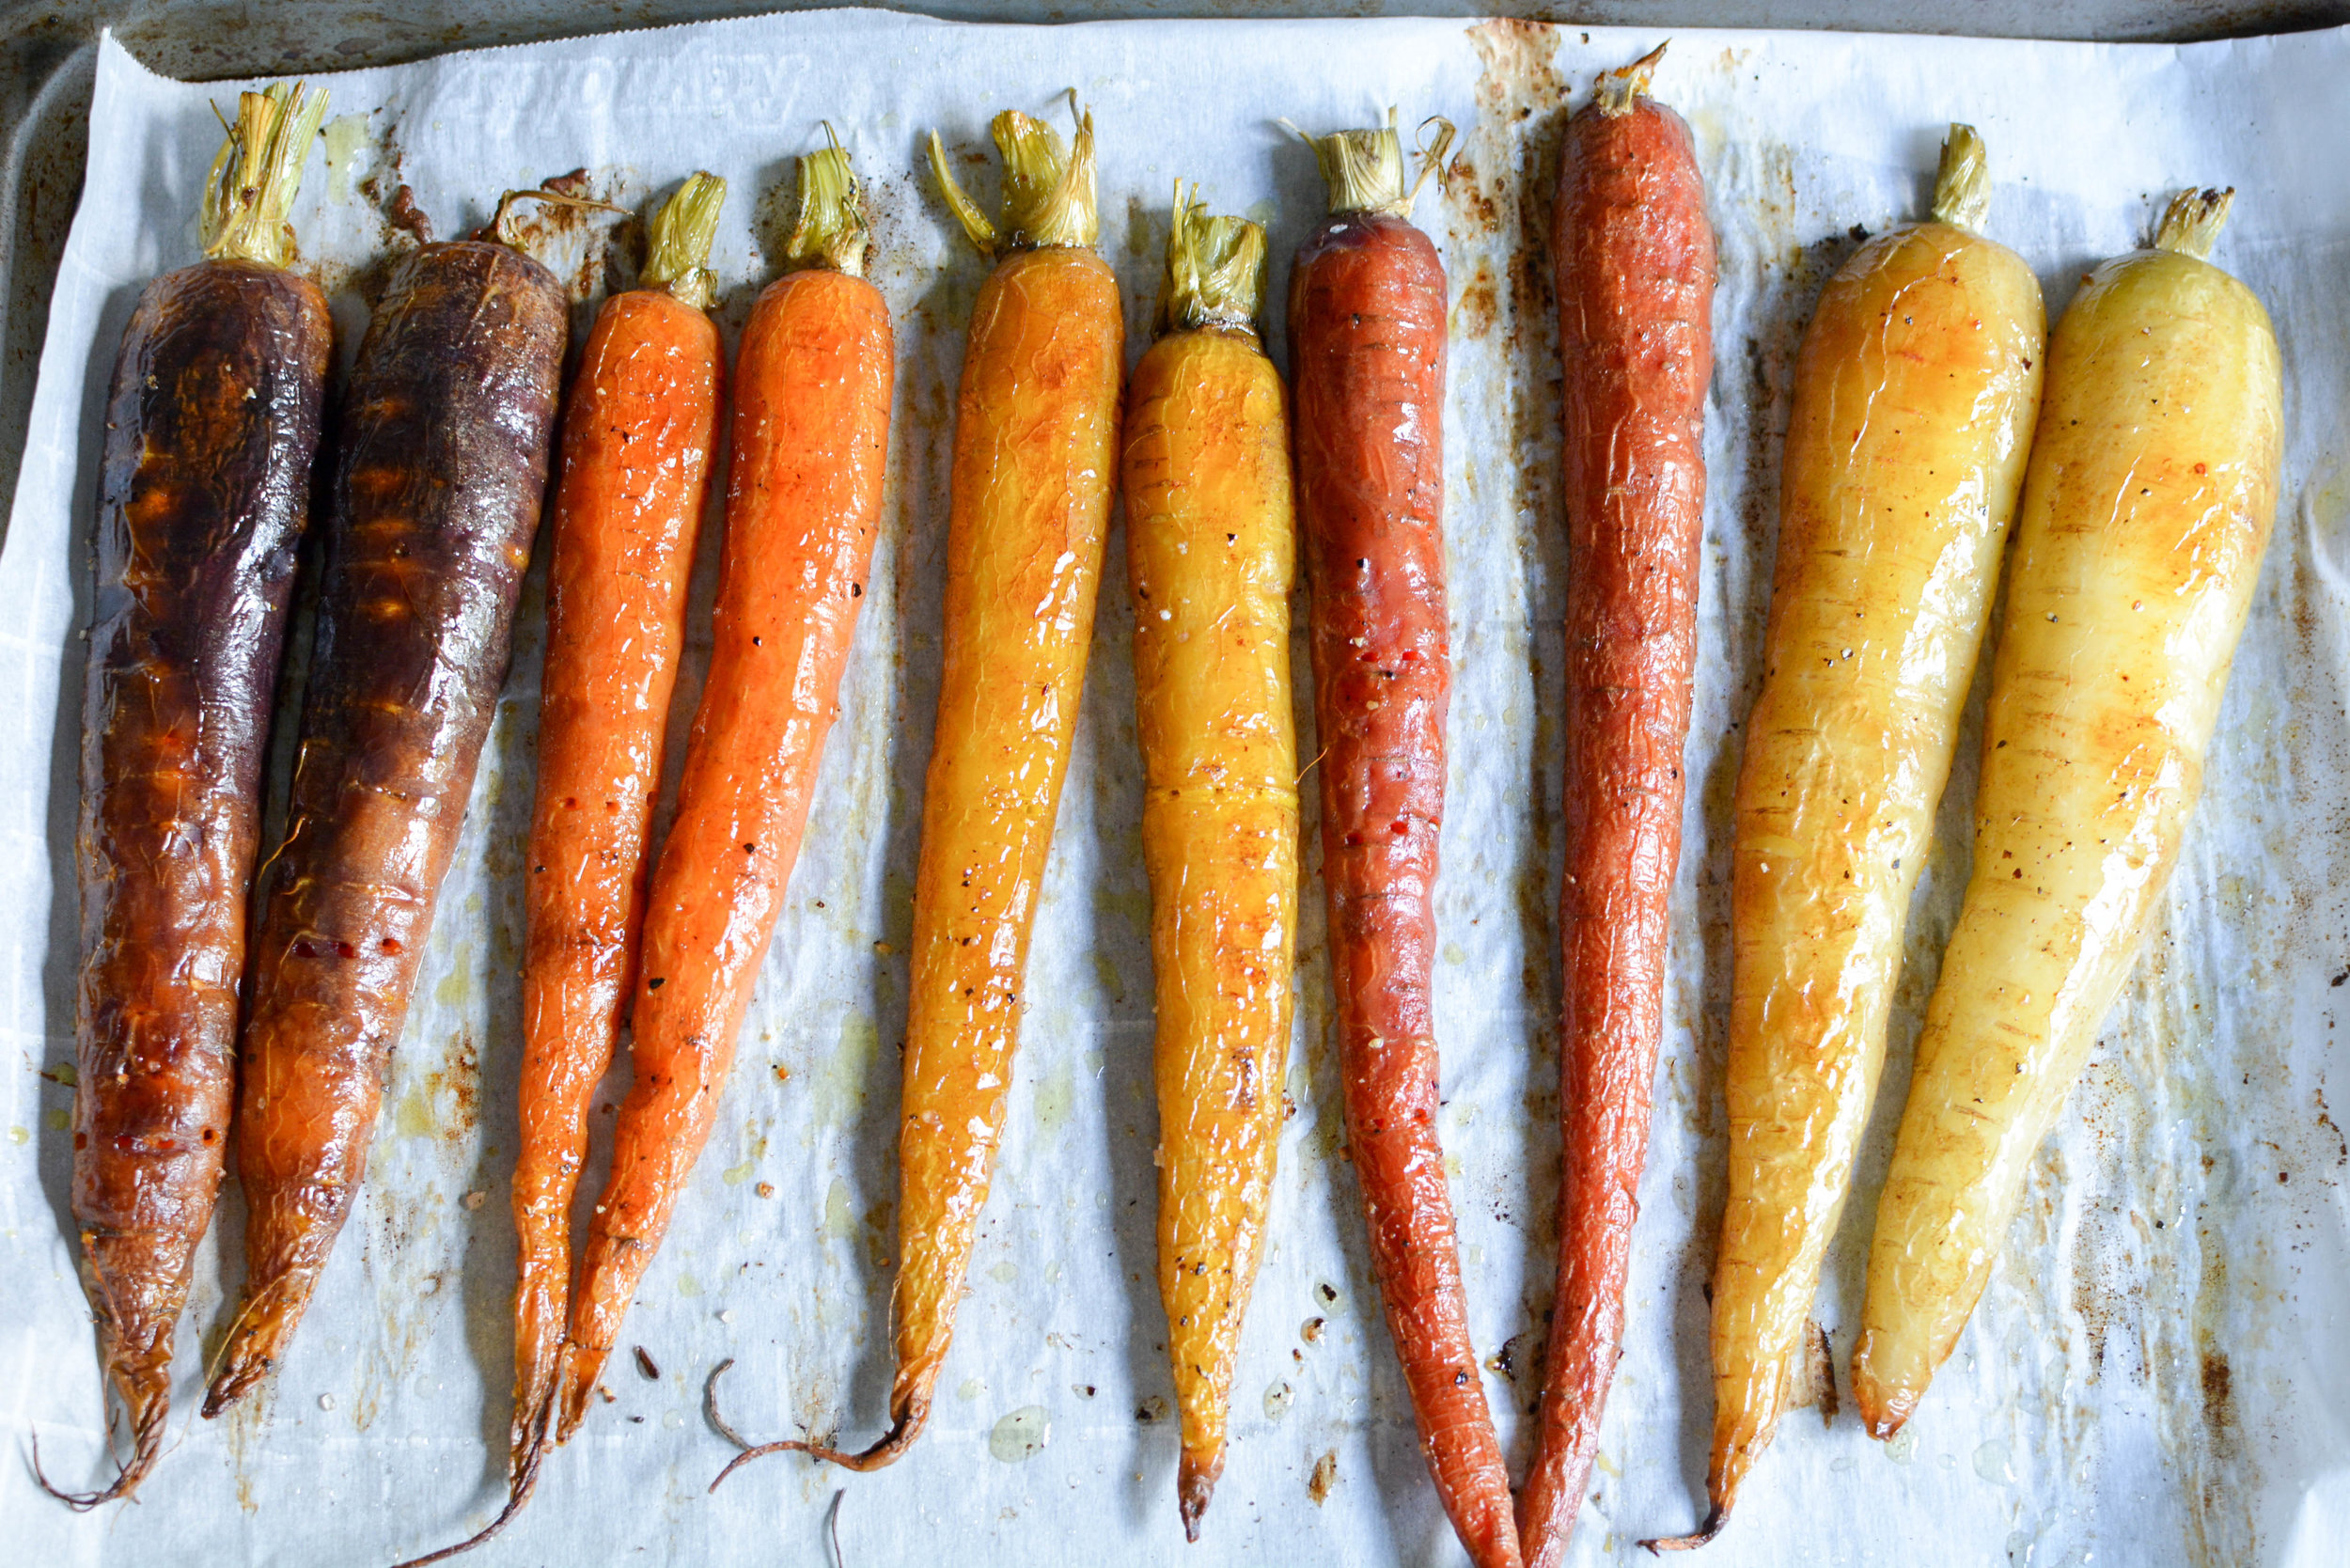  roasted carrots 